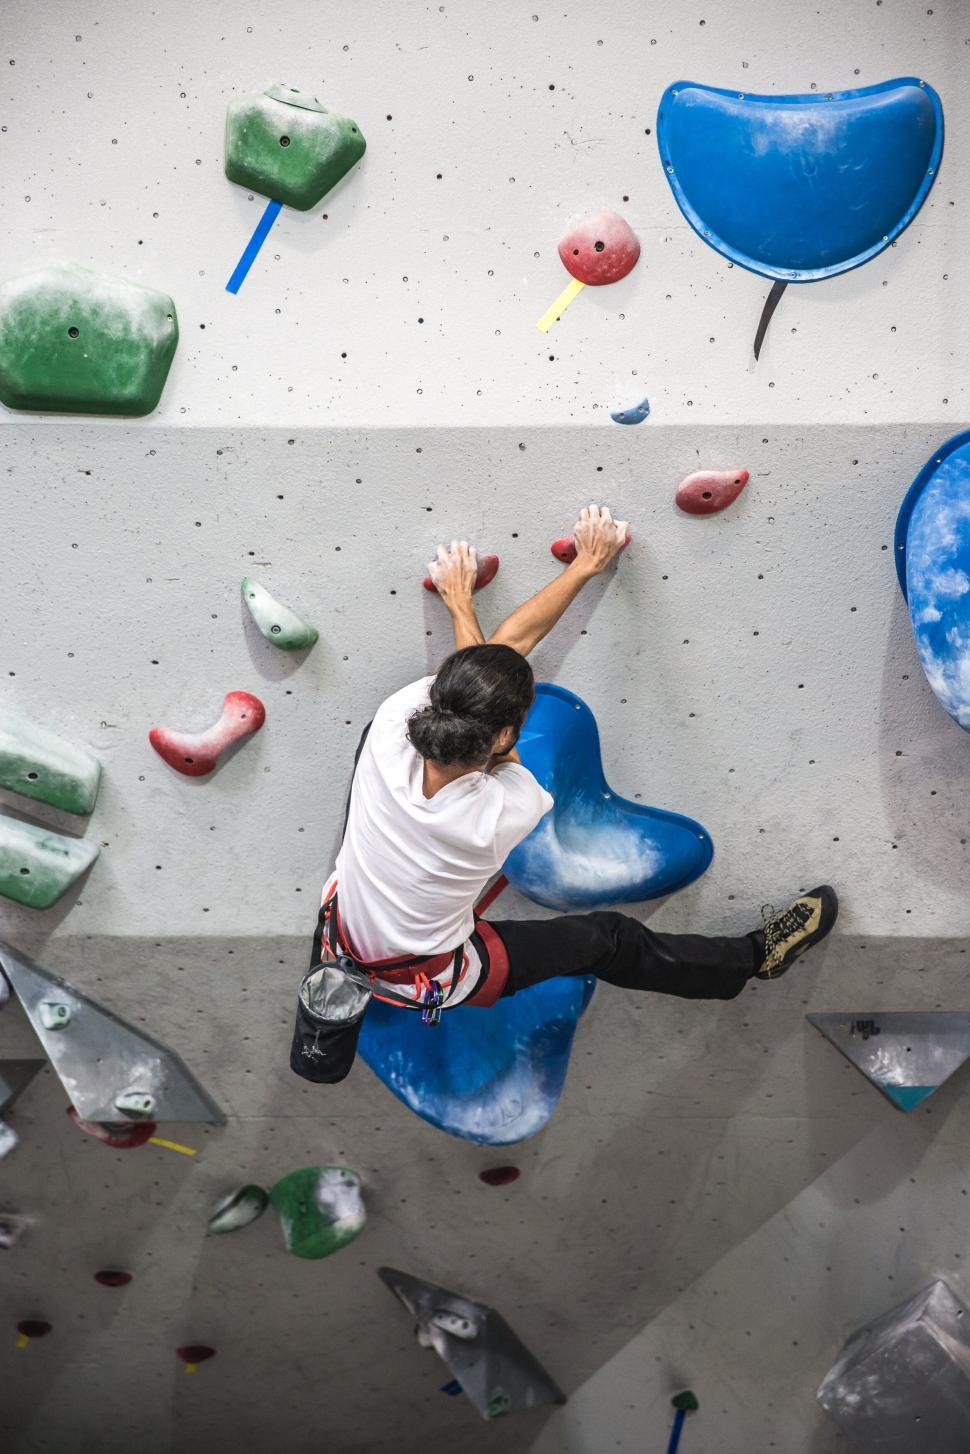 Free Image of Climber ascending indoor climbing wall 